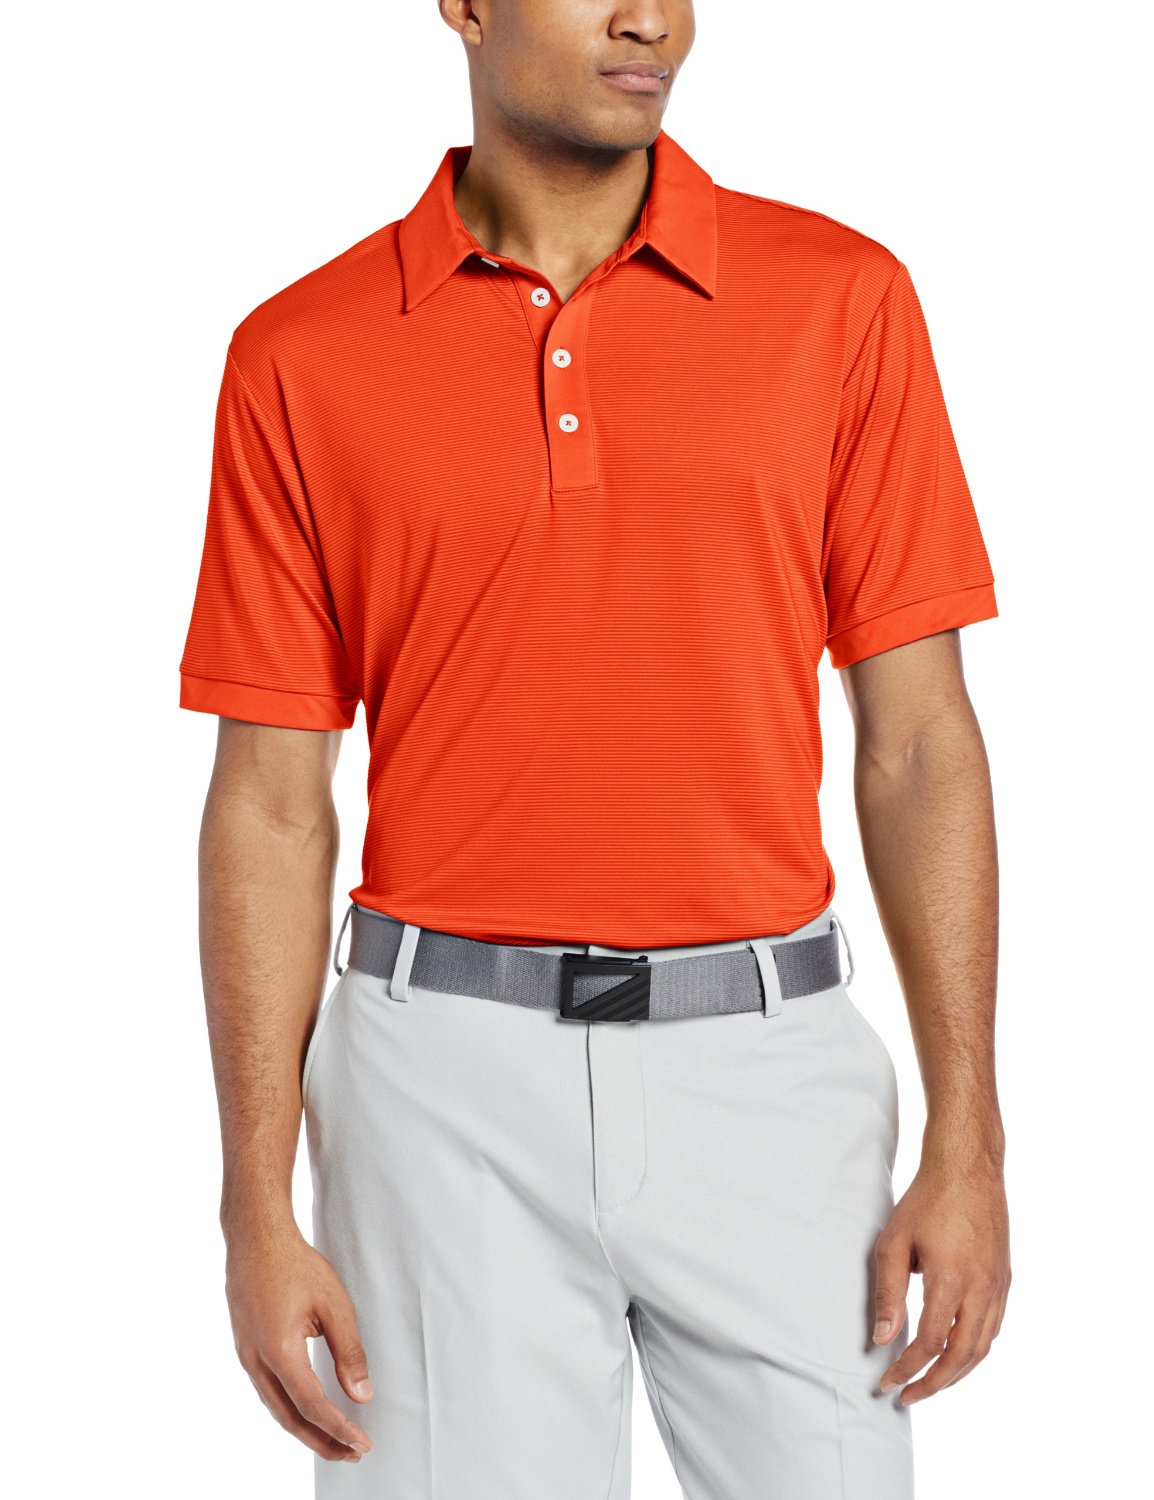 adidas orange golf shirt